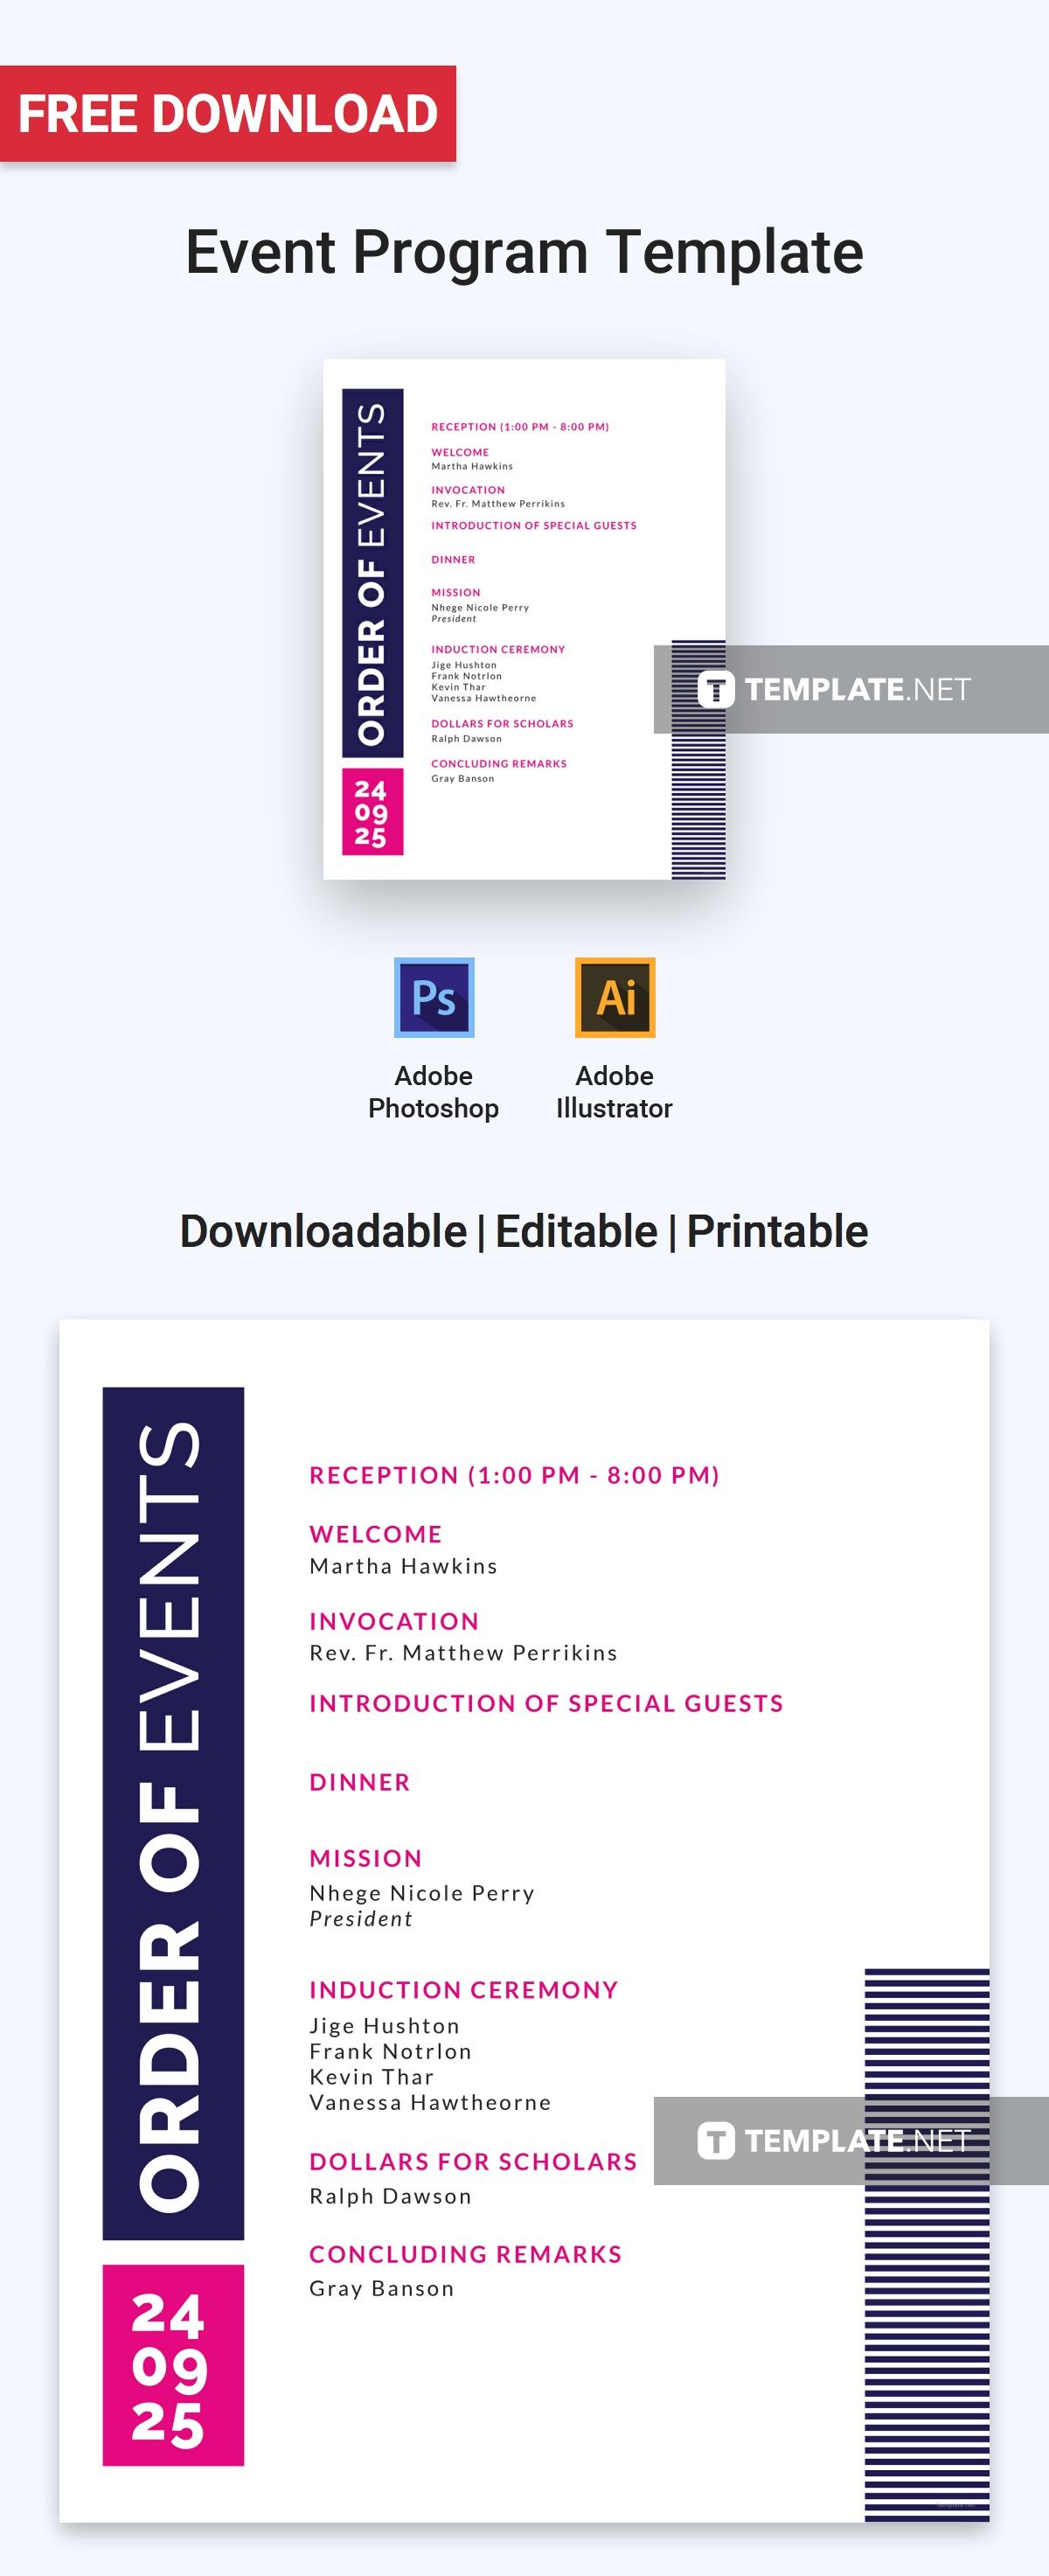 Adobe Indesign Event Program Template renewratemy